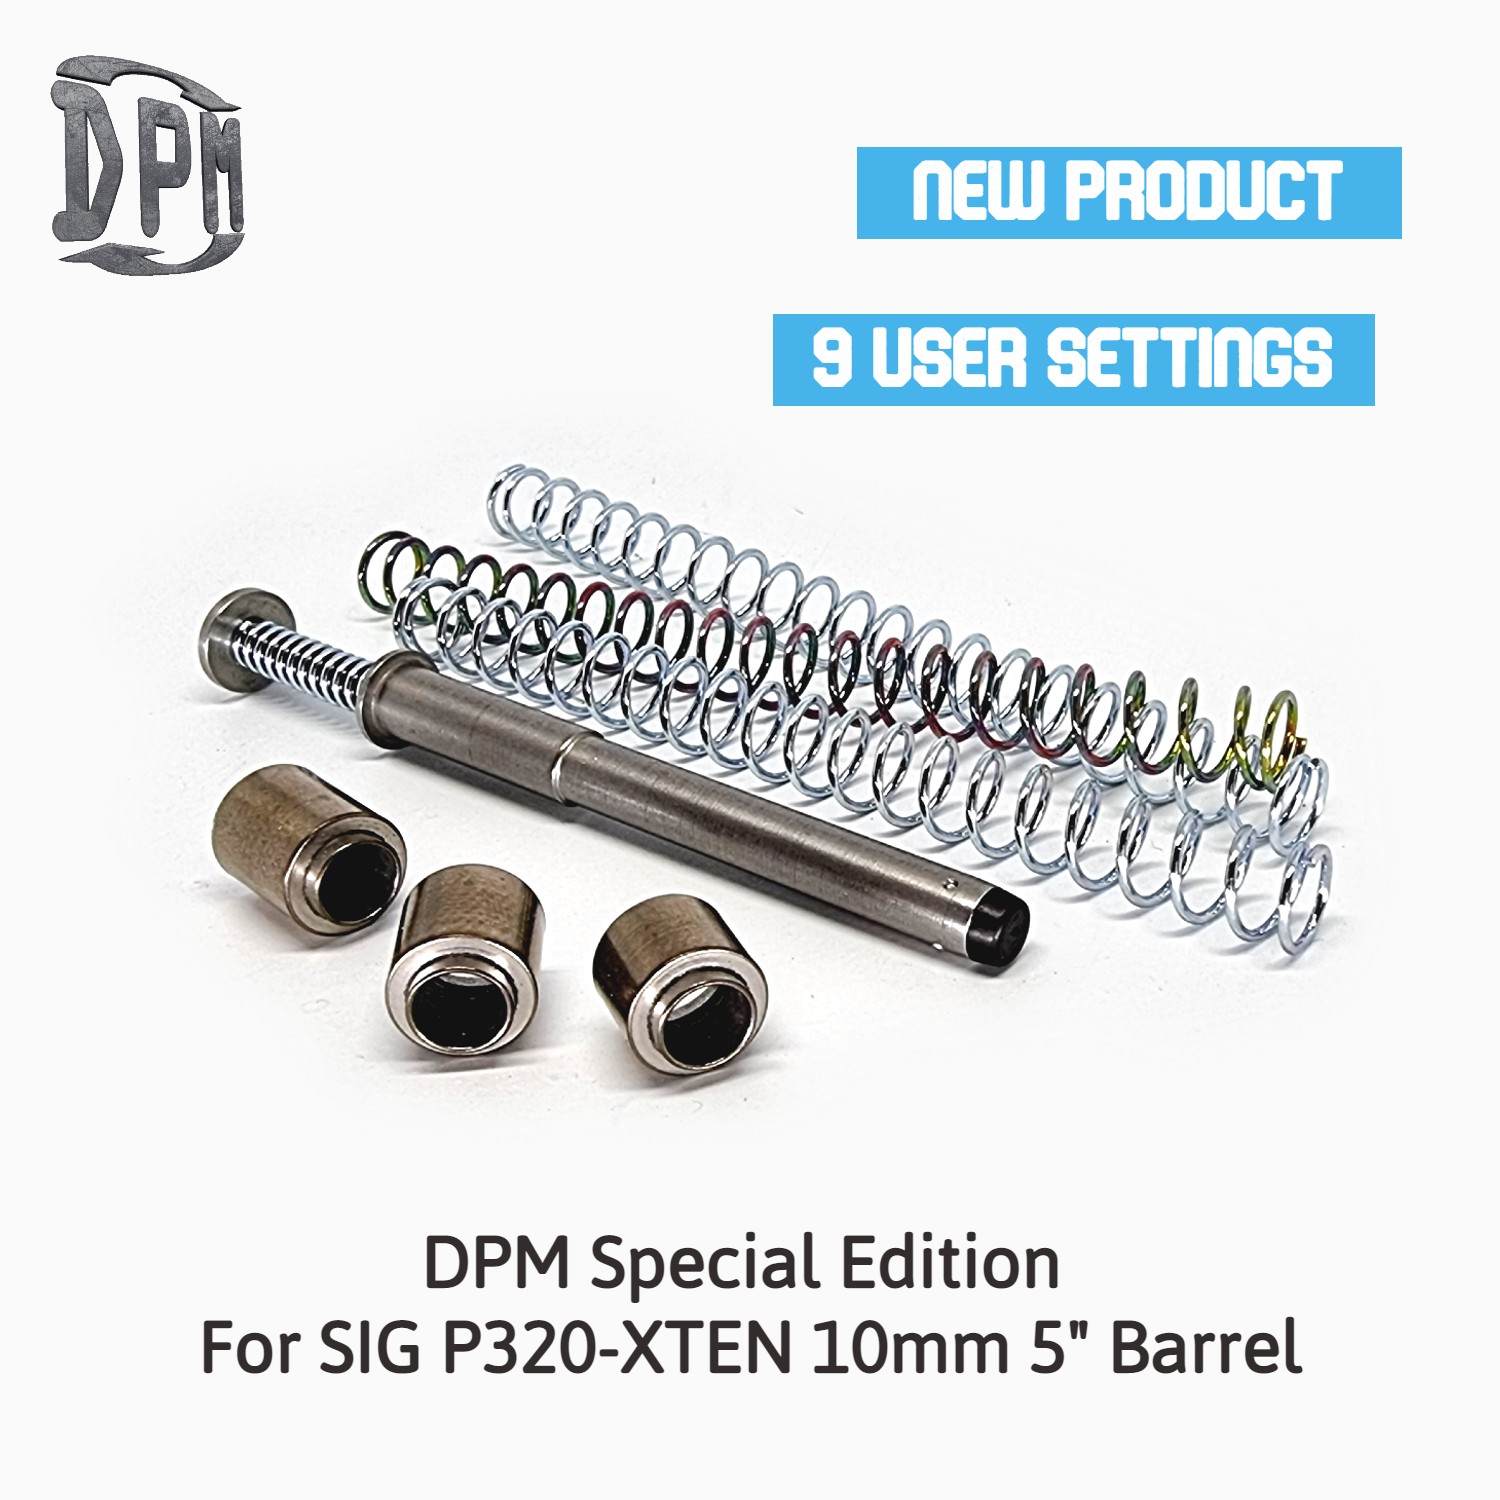 DPM-Special-Edition-For-SIG-P320-XTEN-10mm-5-Barrel-Heavy-Duty